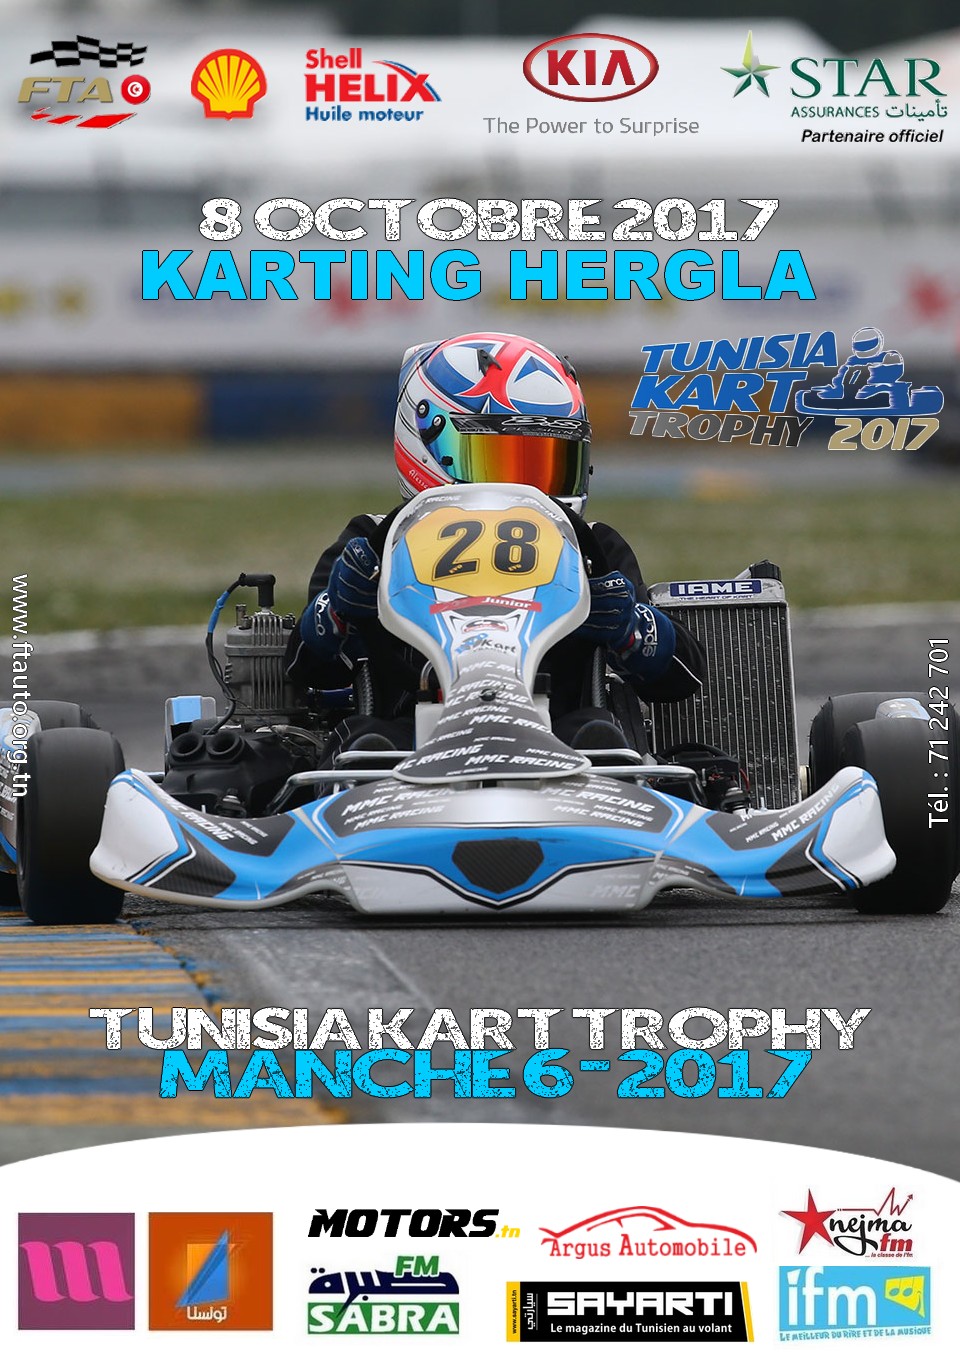 Manche 6 – Tunisia Kart Trophy 2017